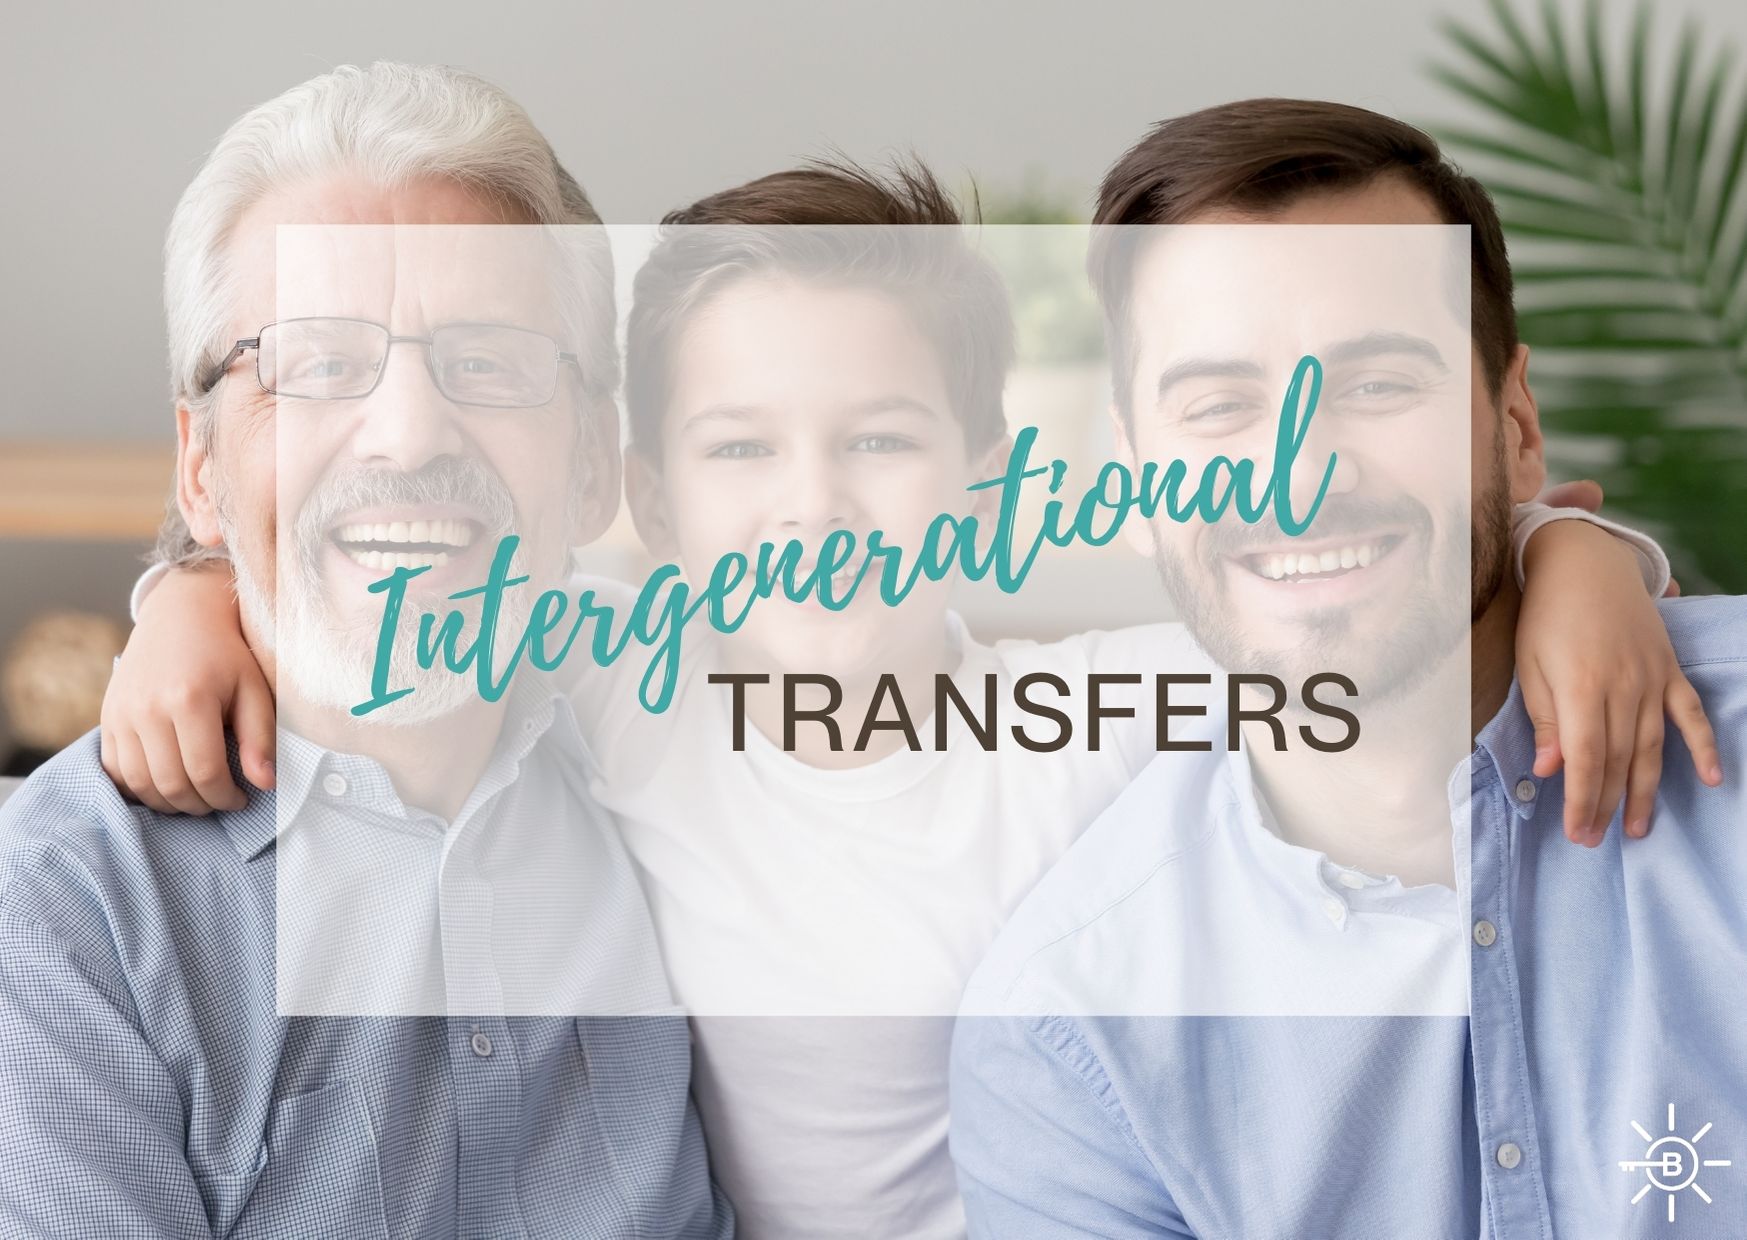 Intergenerational Transfer